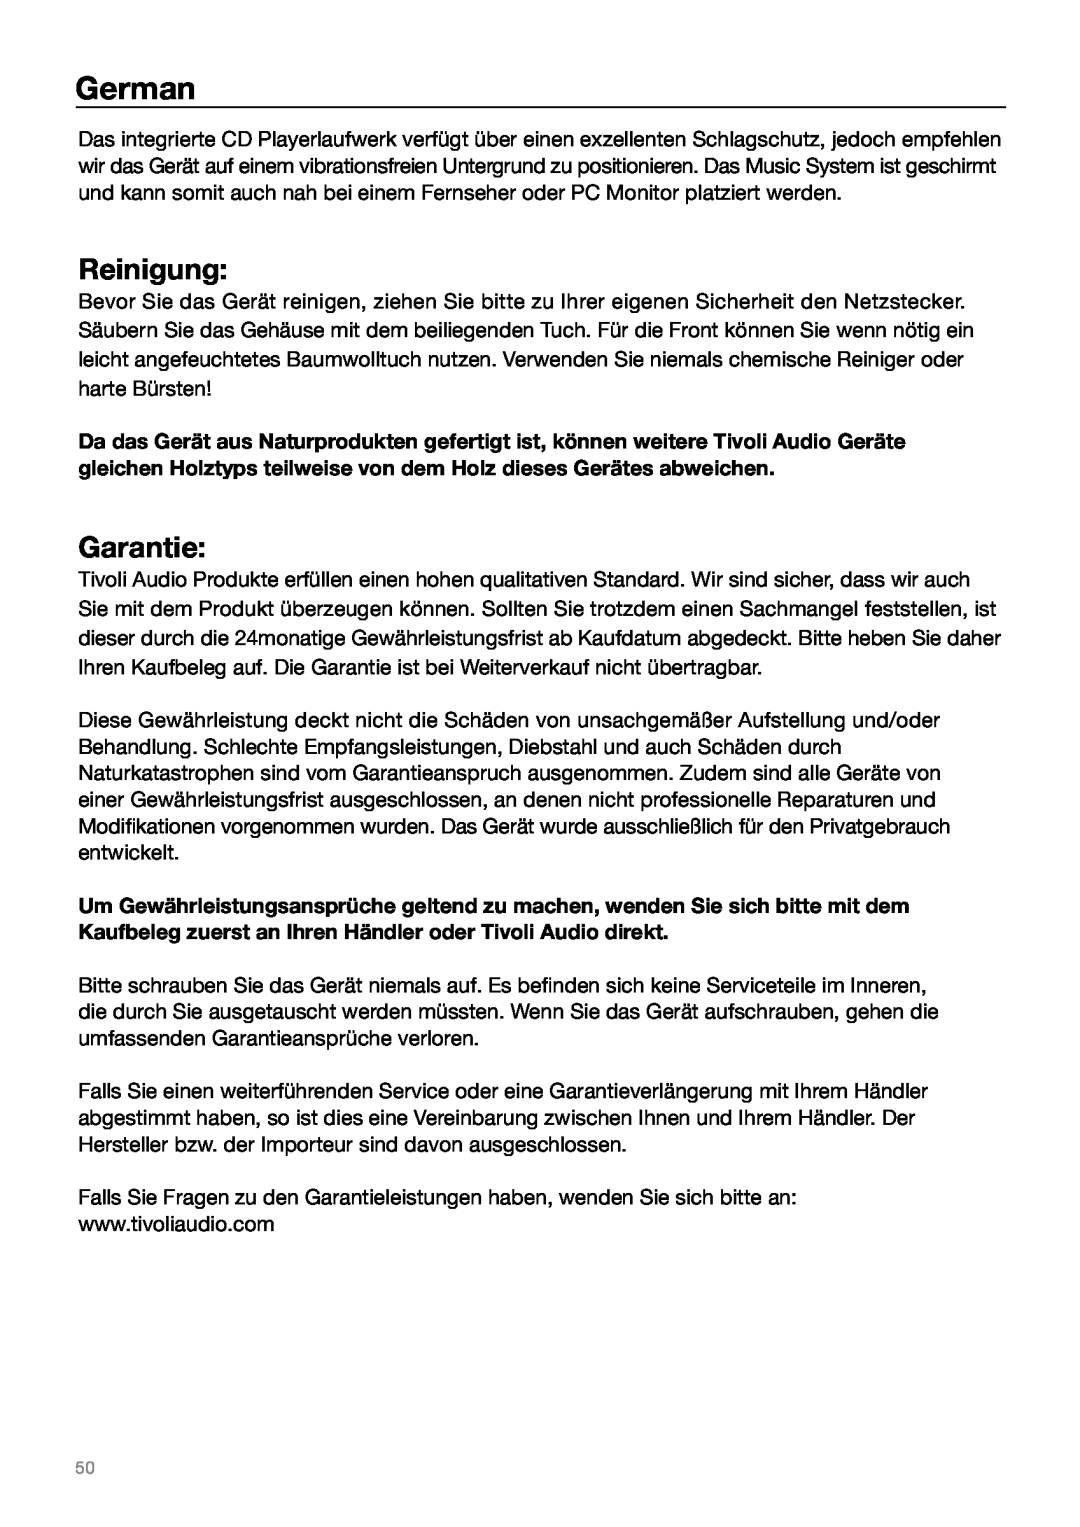 Tivoli Audio MUSIC SYSTEM owner manual Reinigung, German, Garantie 